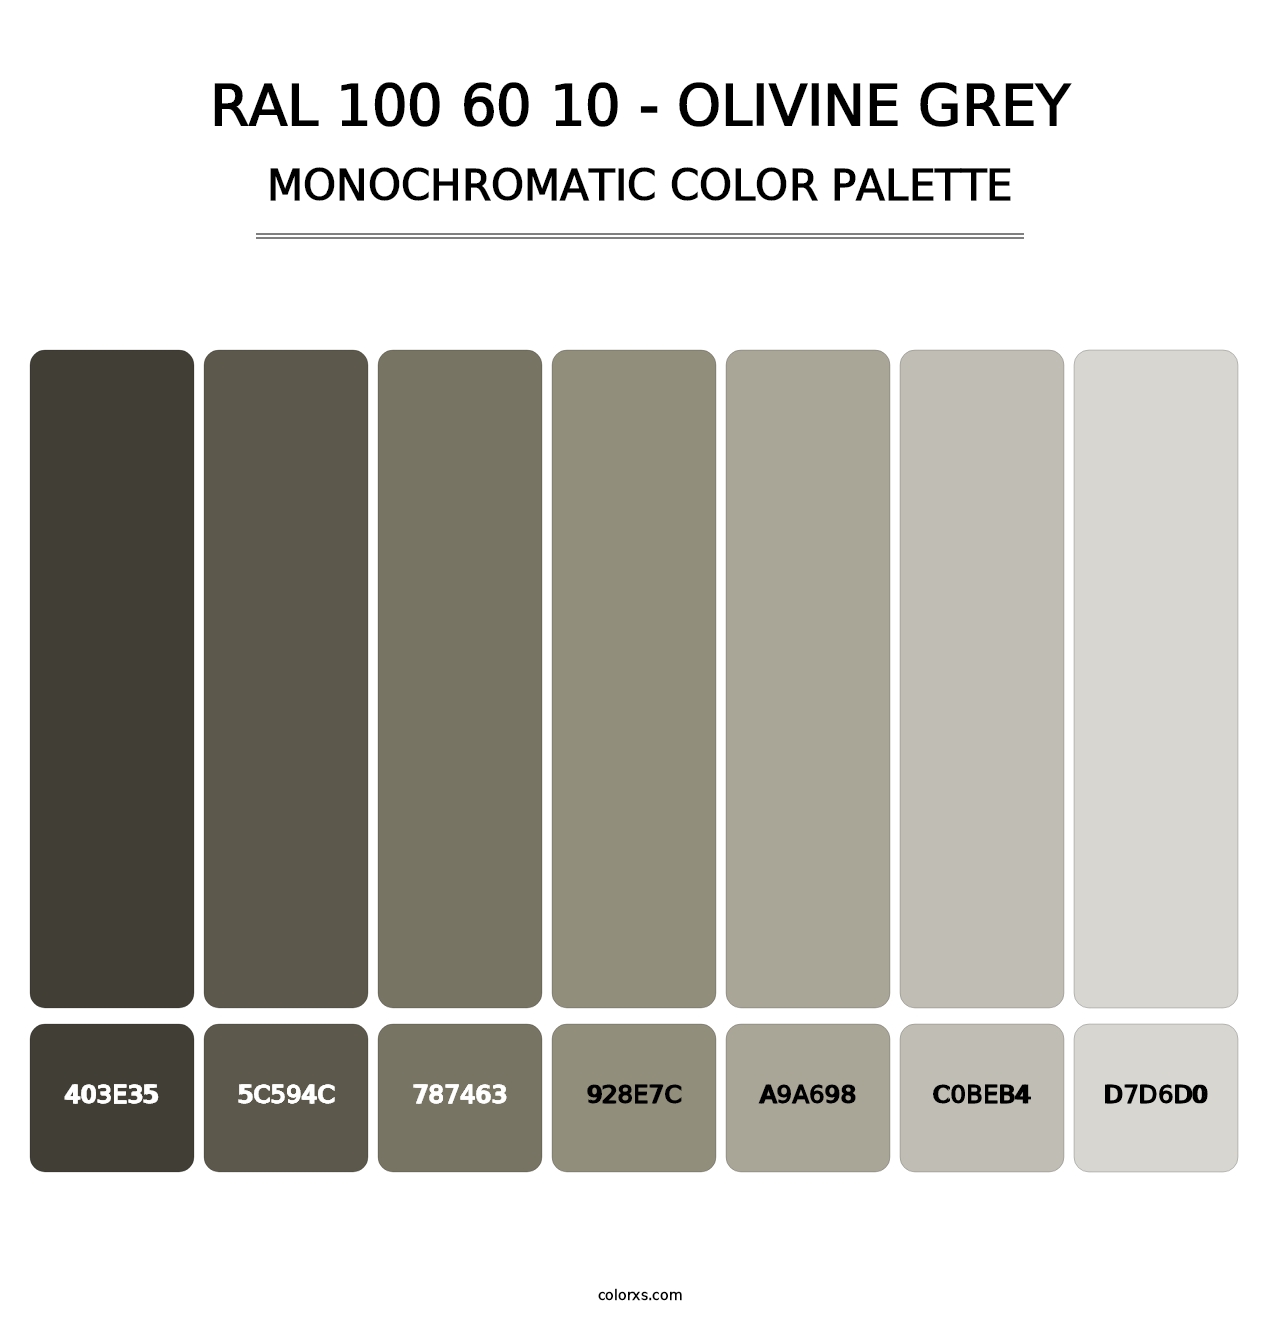 RAL 100 60 10 - Olivine Grey - Monochromatic Color Palette